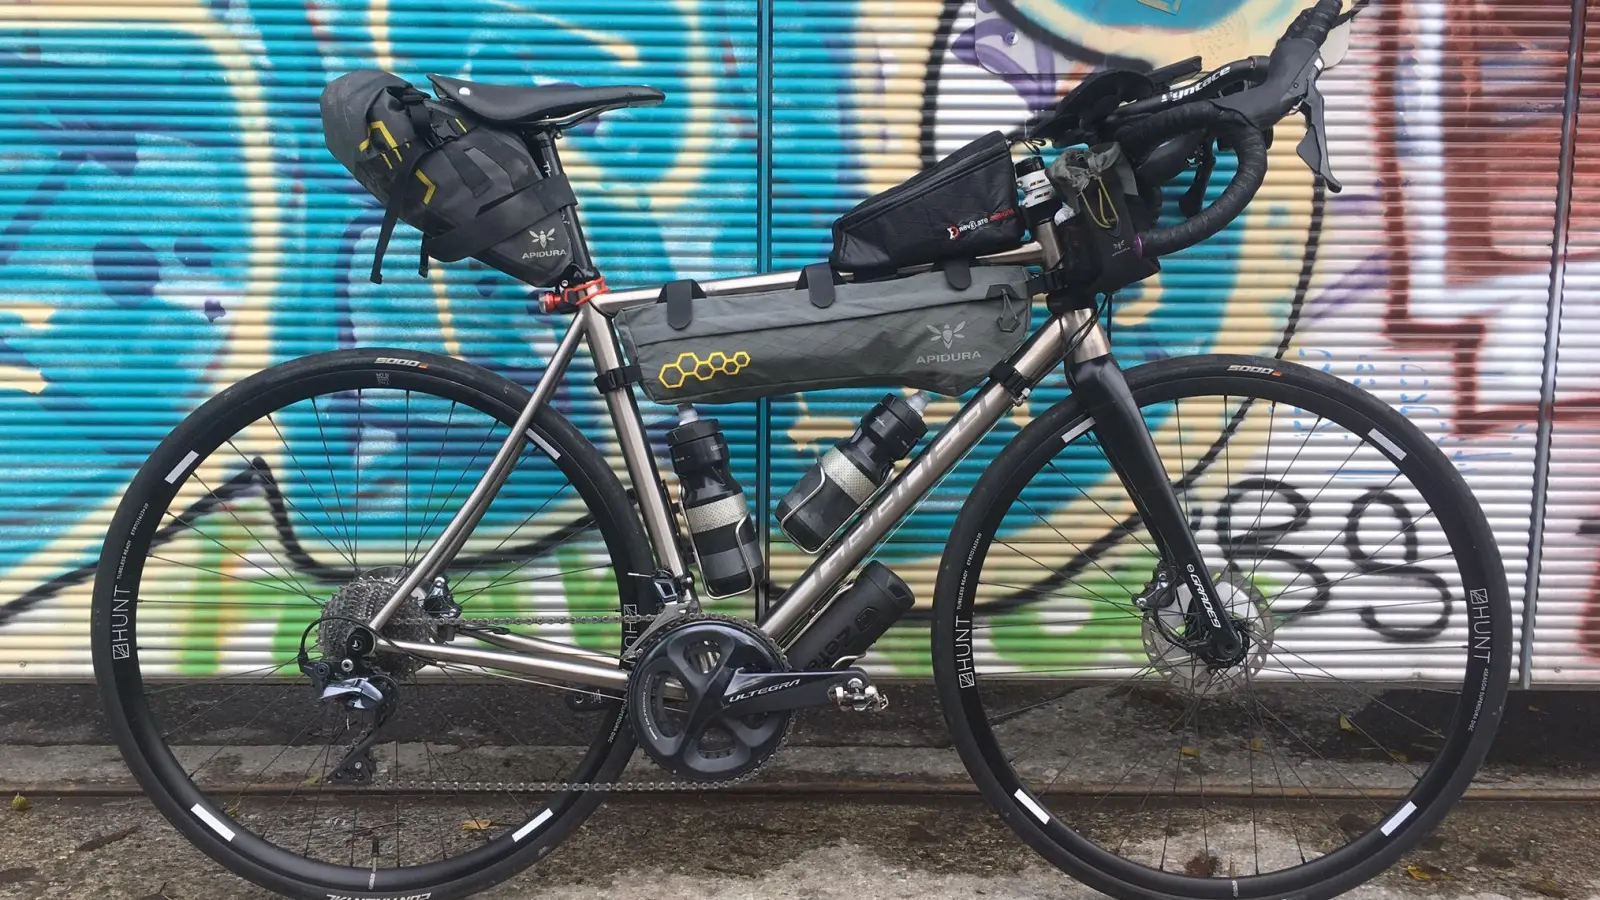 Bikes of Two Volcano Sprint 2019